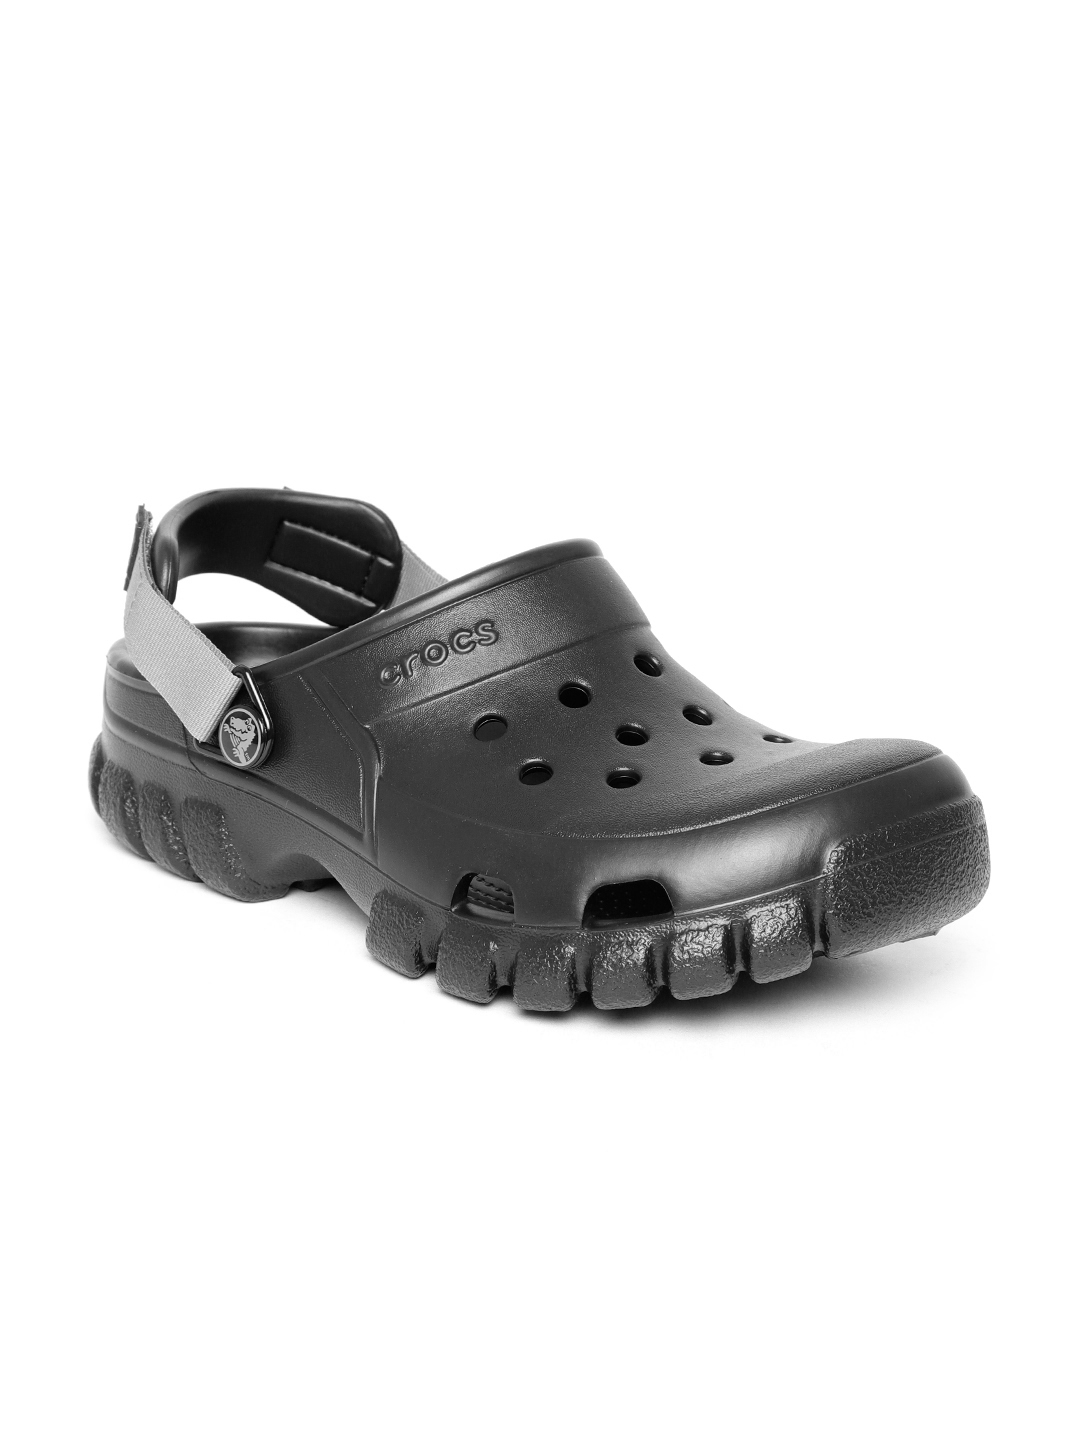 crocs unisex black solid clogs